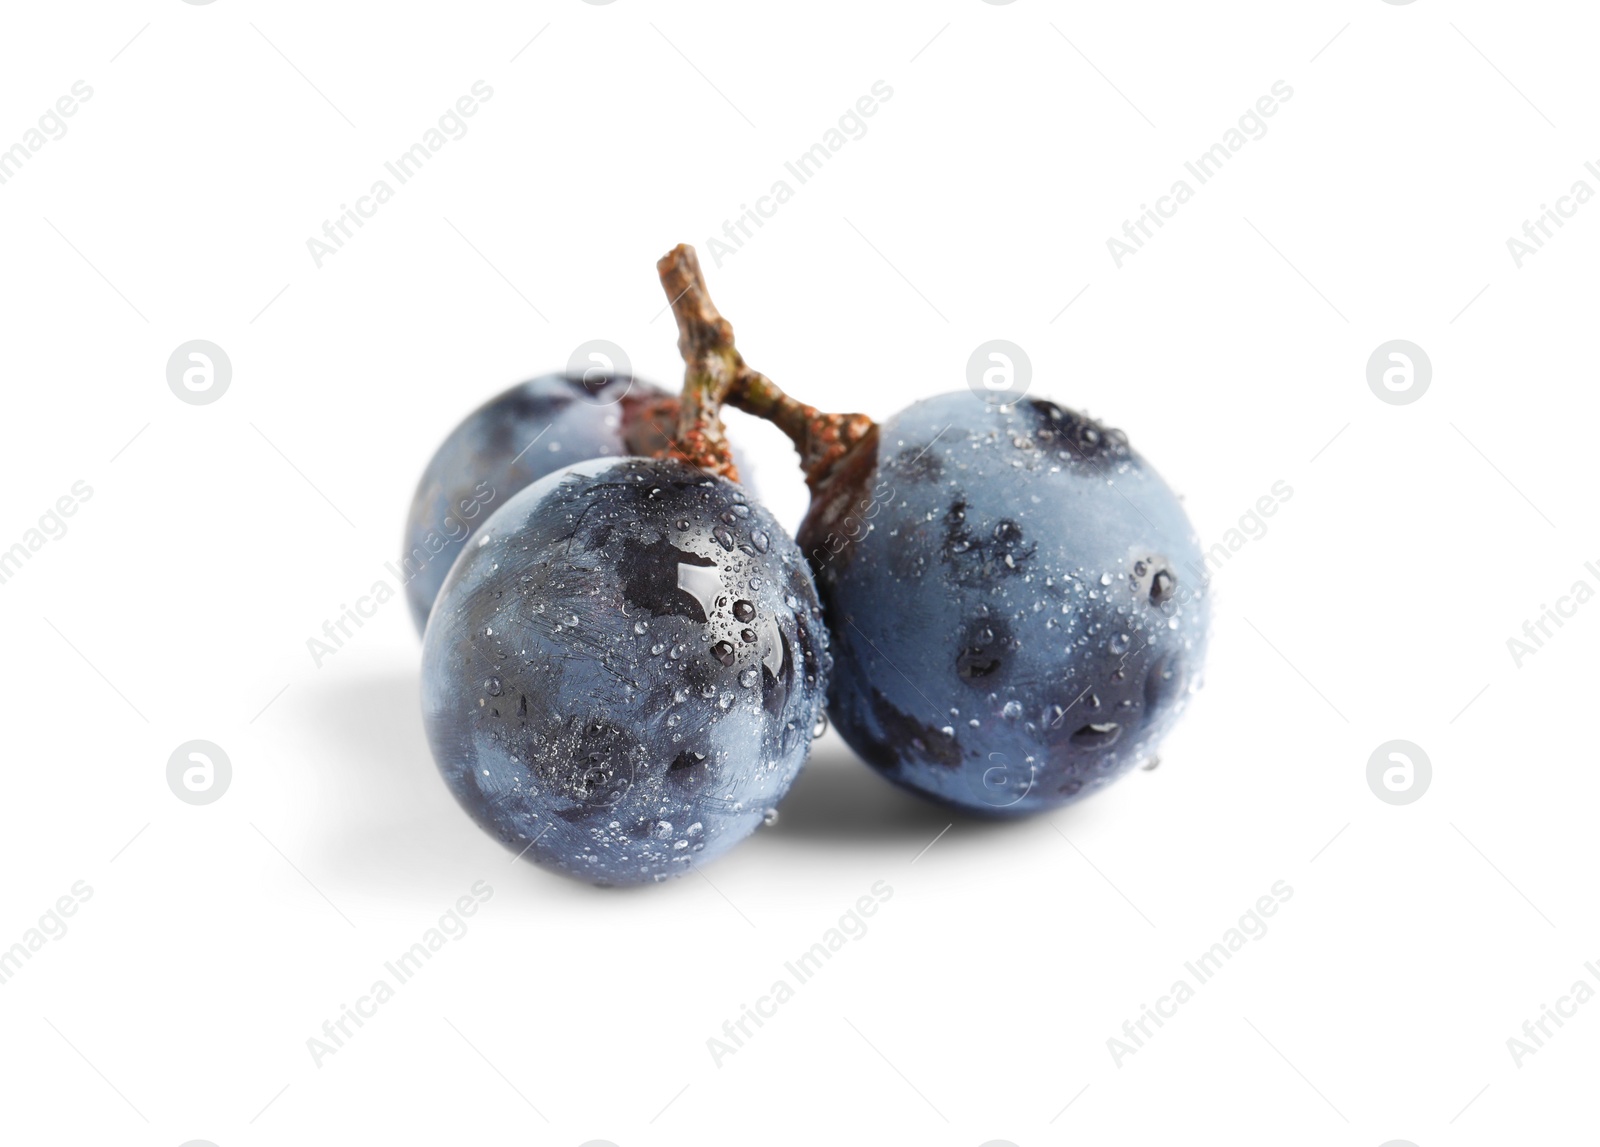 Photo of Delicious ripe dark blue grapes on white background